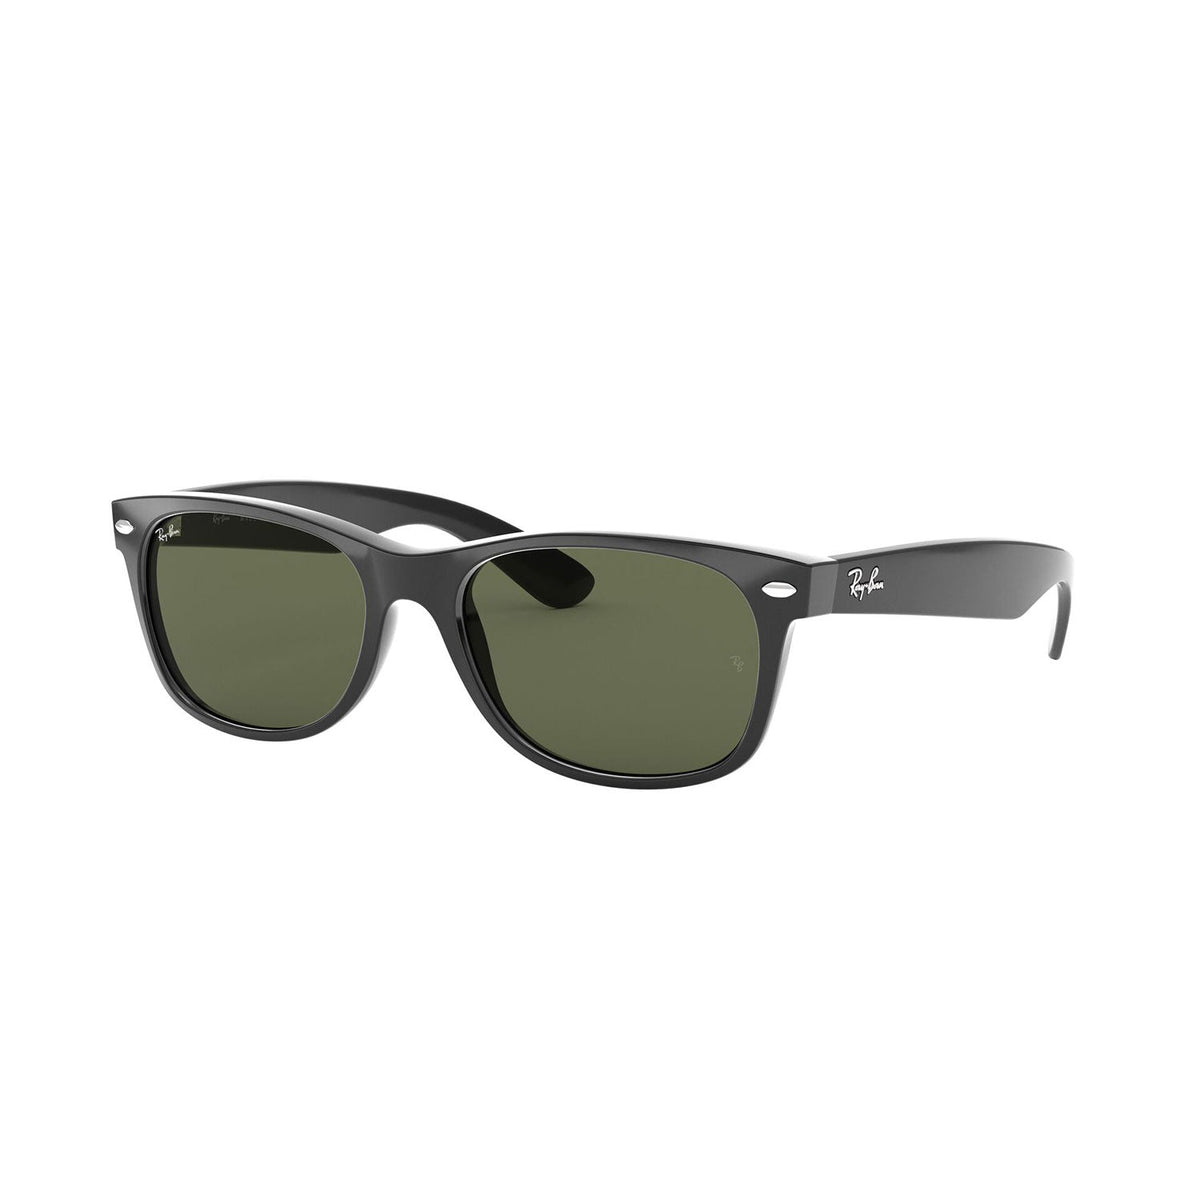 sunglasses ray ban model rb 2132 color 901L black